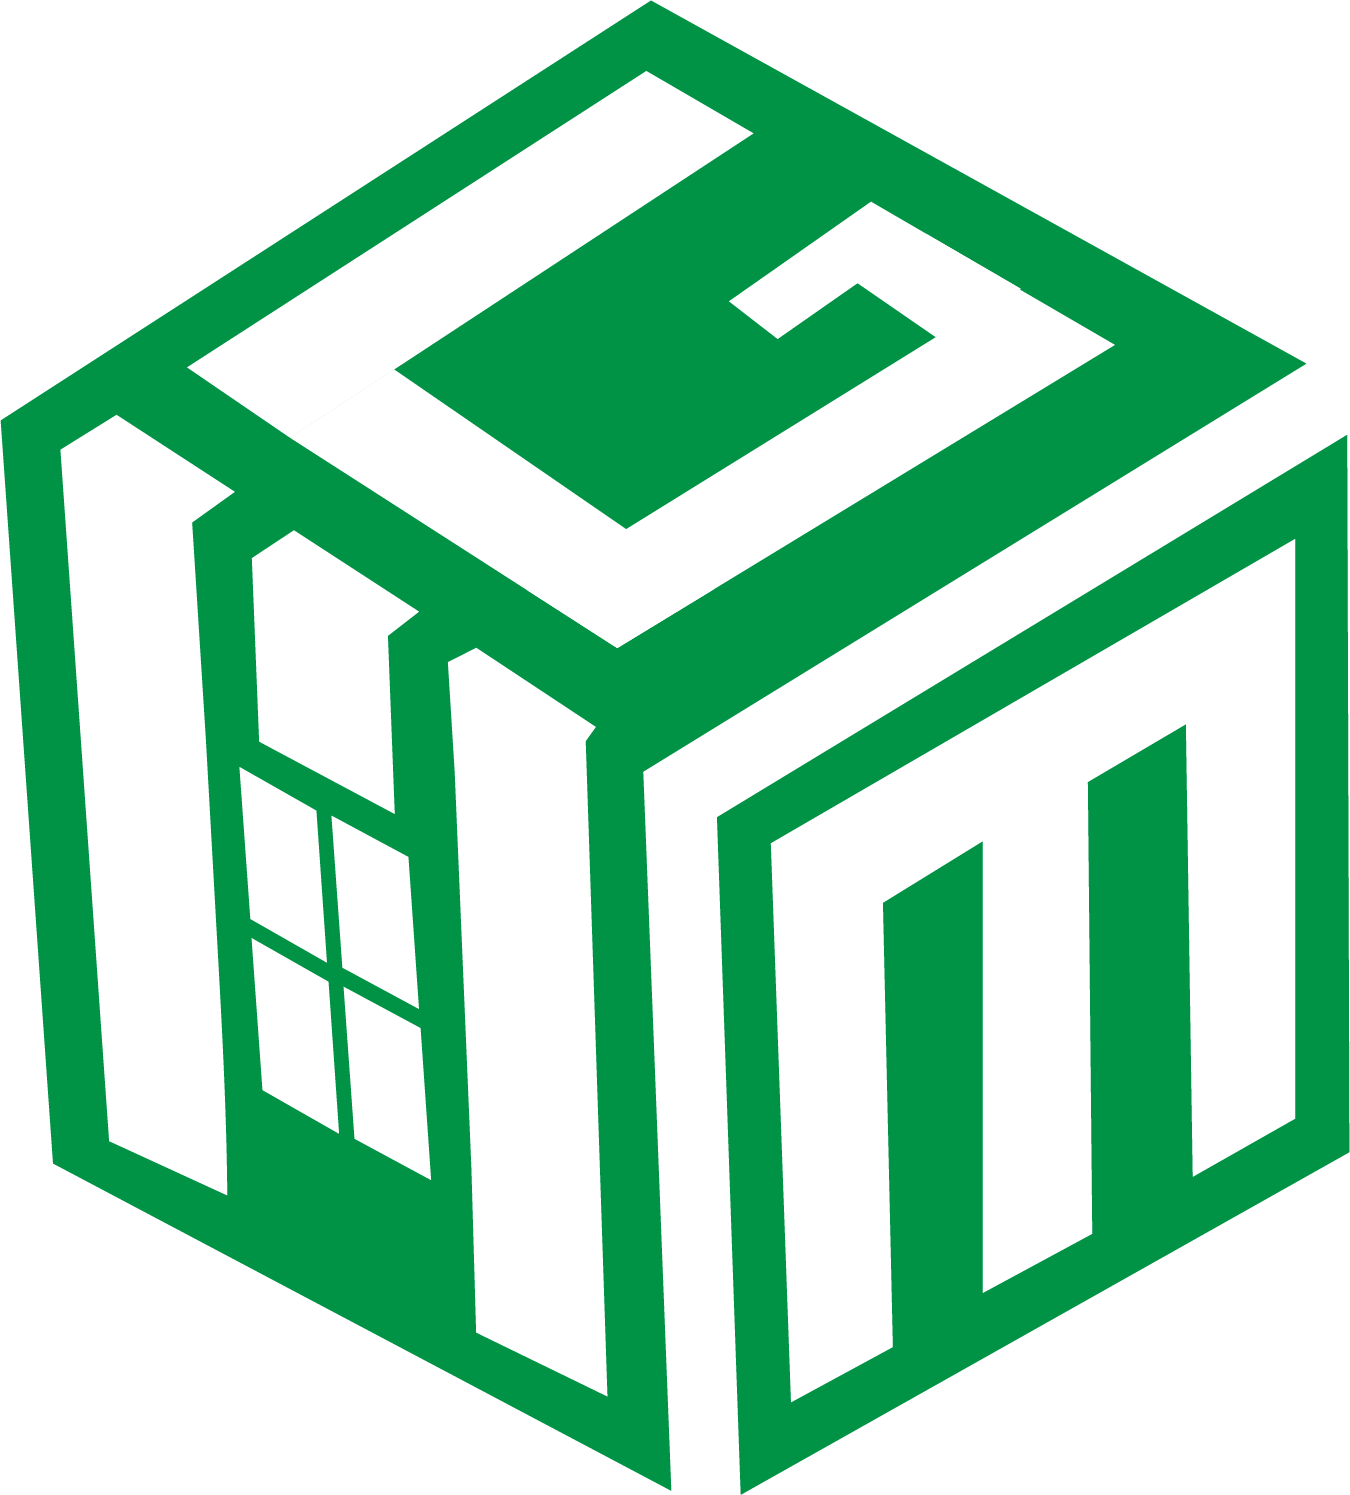 Green Minds Building Inc.'s logo